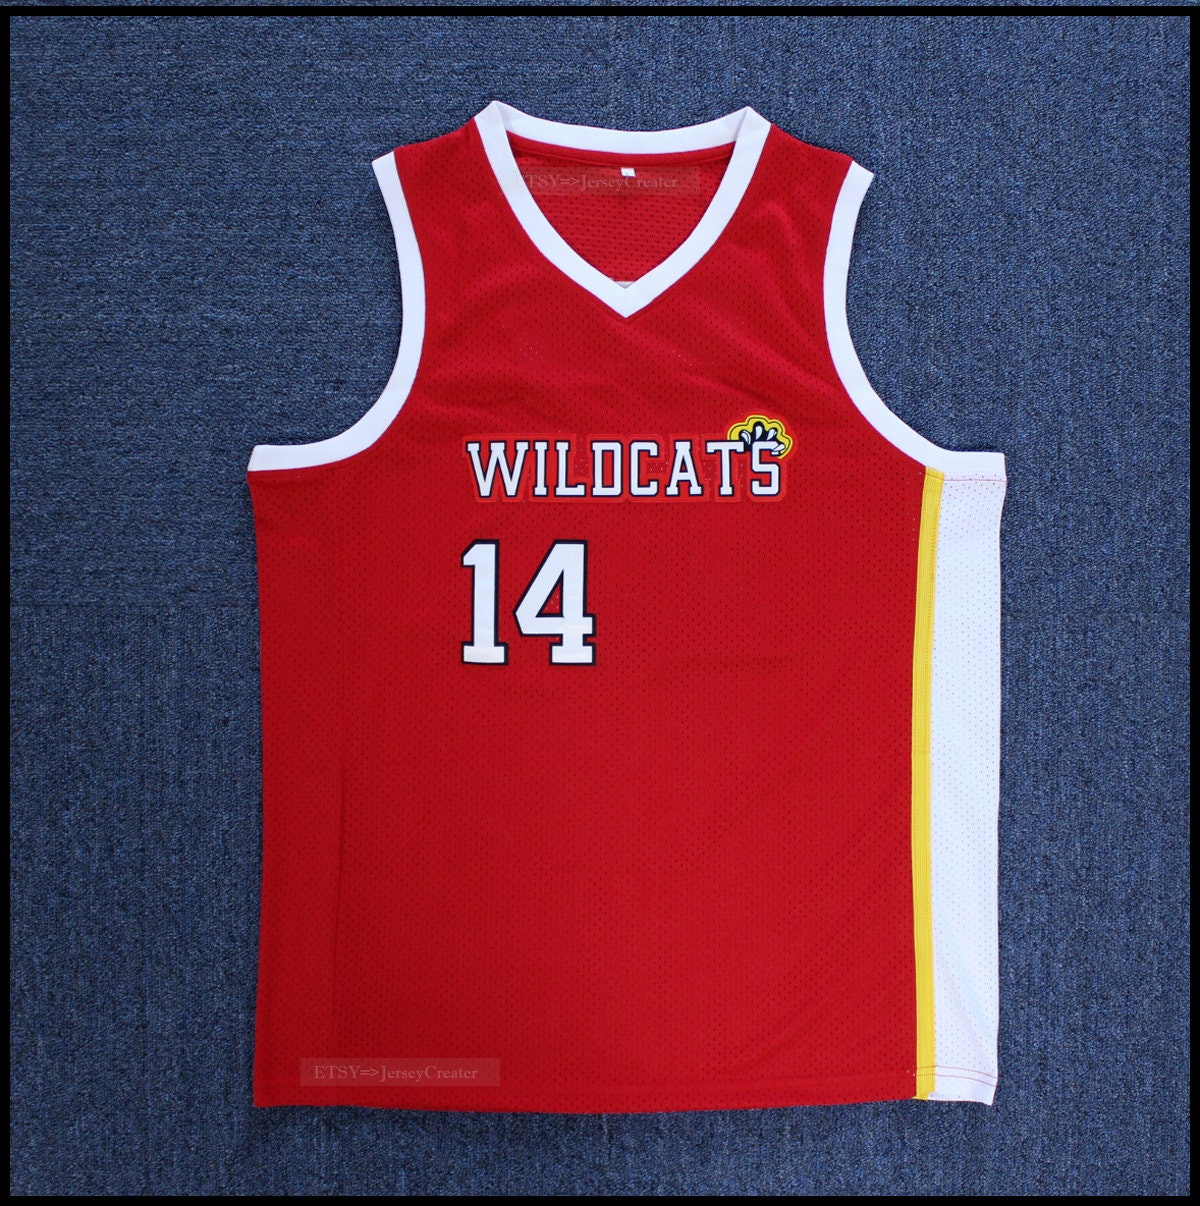 Wildcats NBA champions jersey